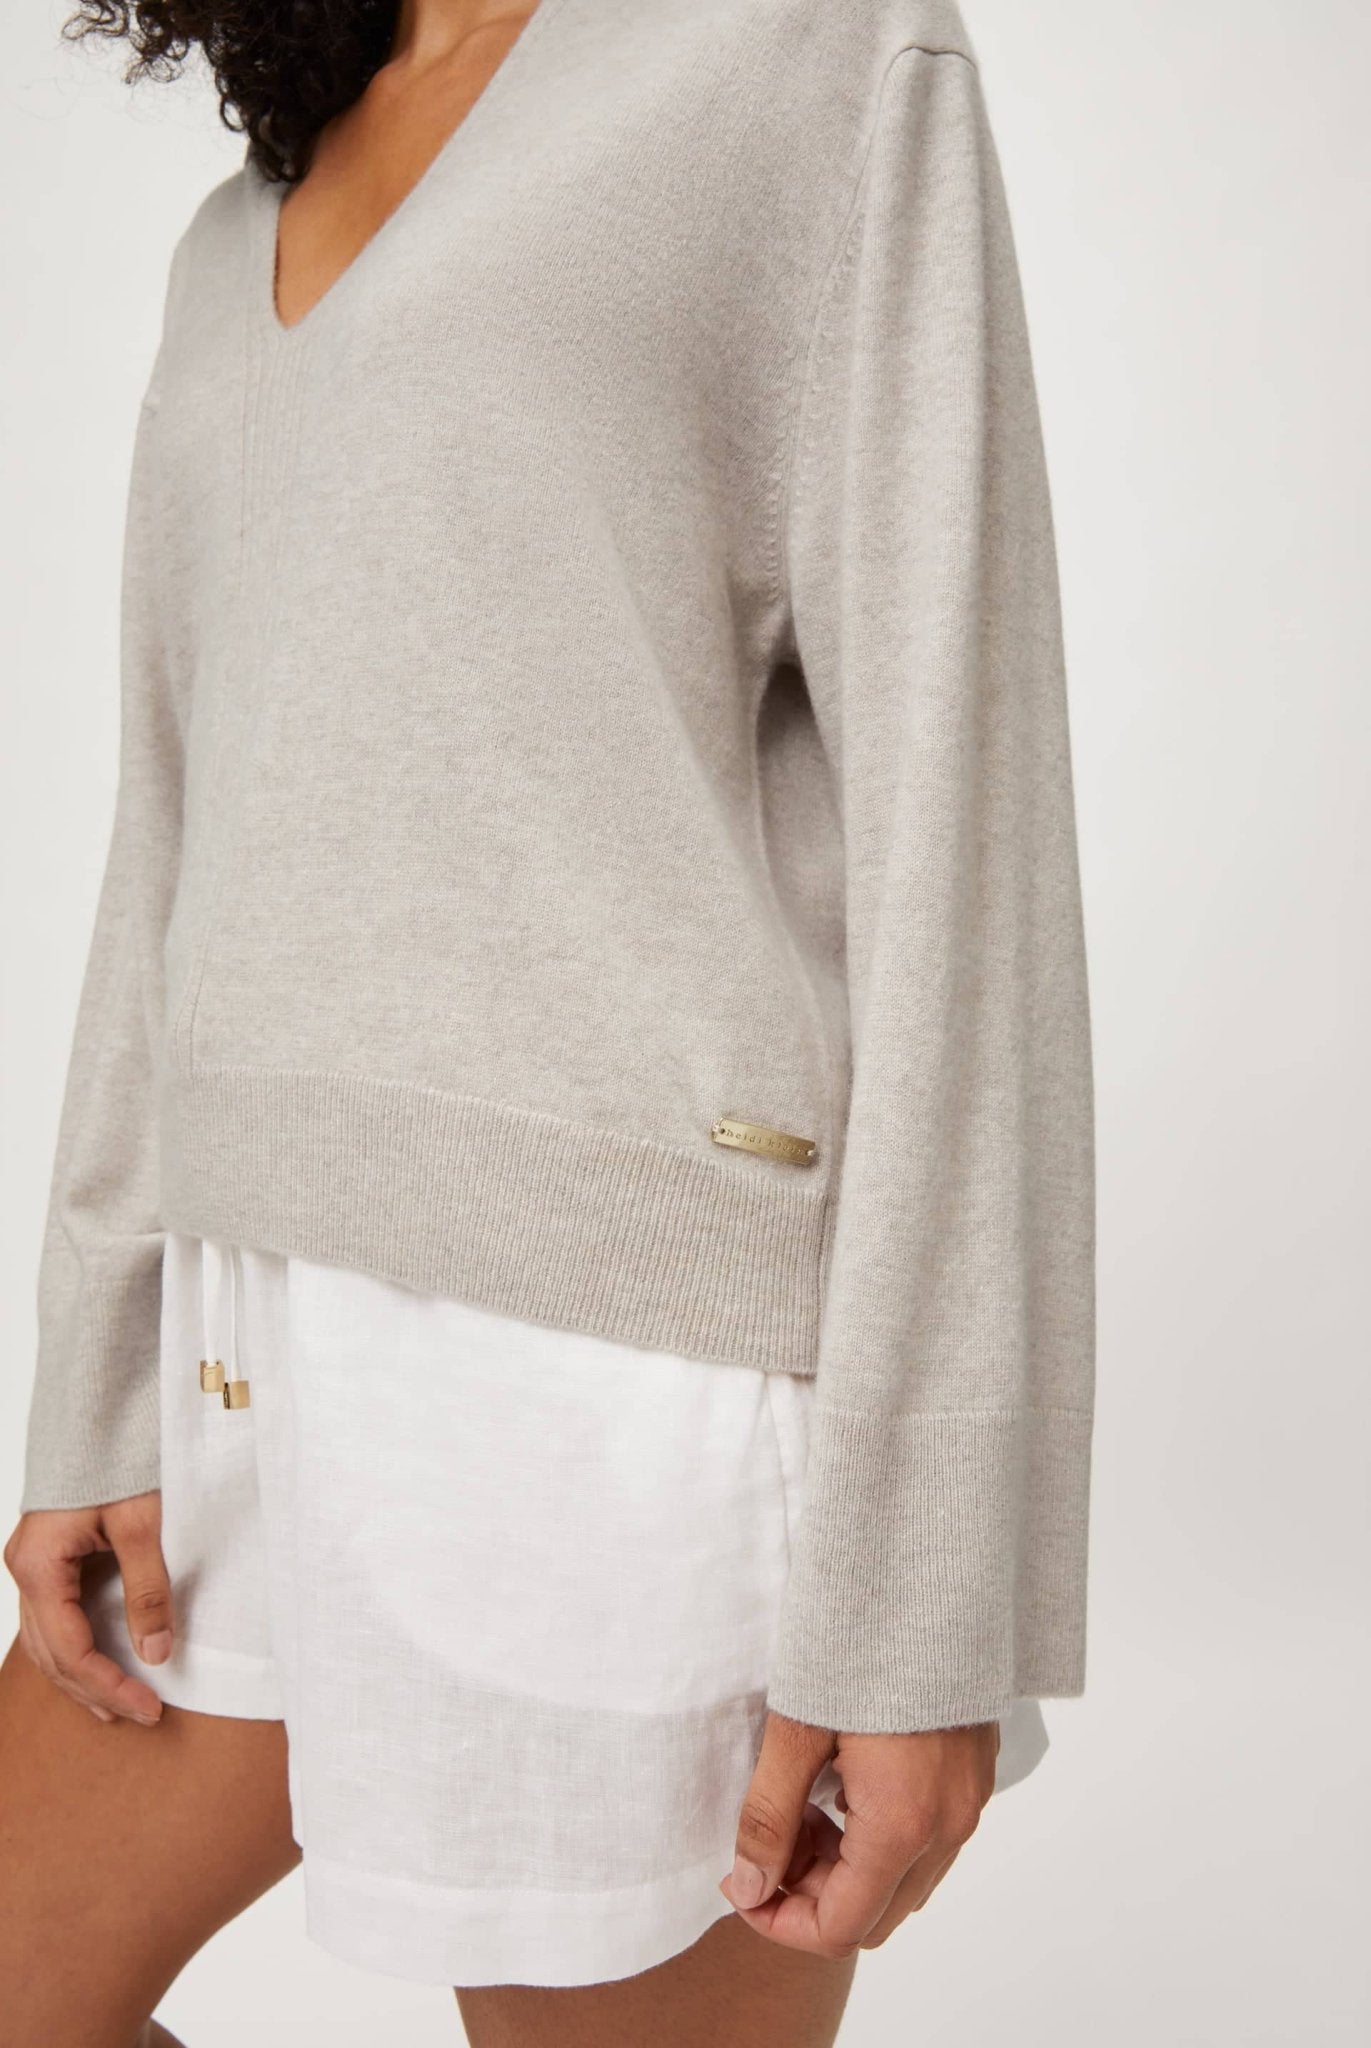 Santa Barbara Collared Knit in Cream - Heidi Klein - UK Store